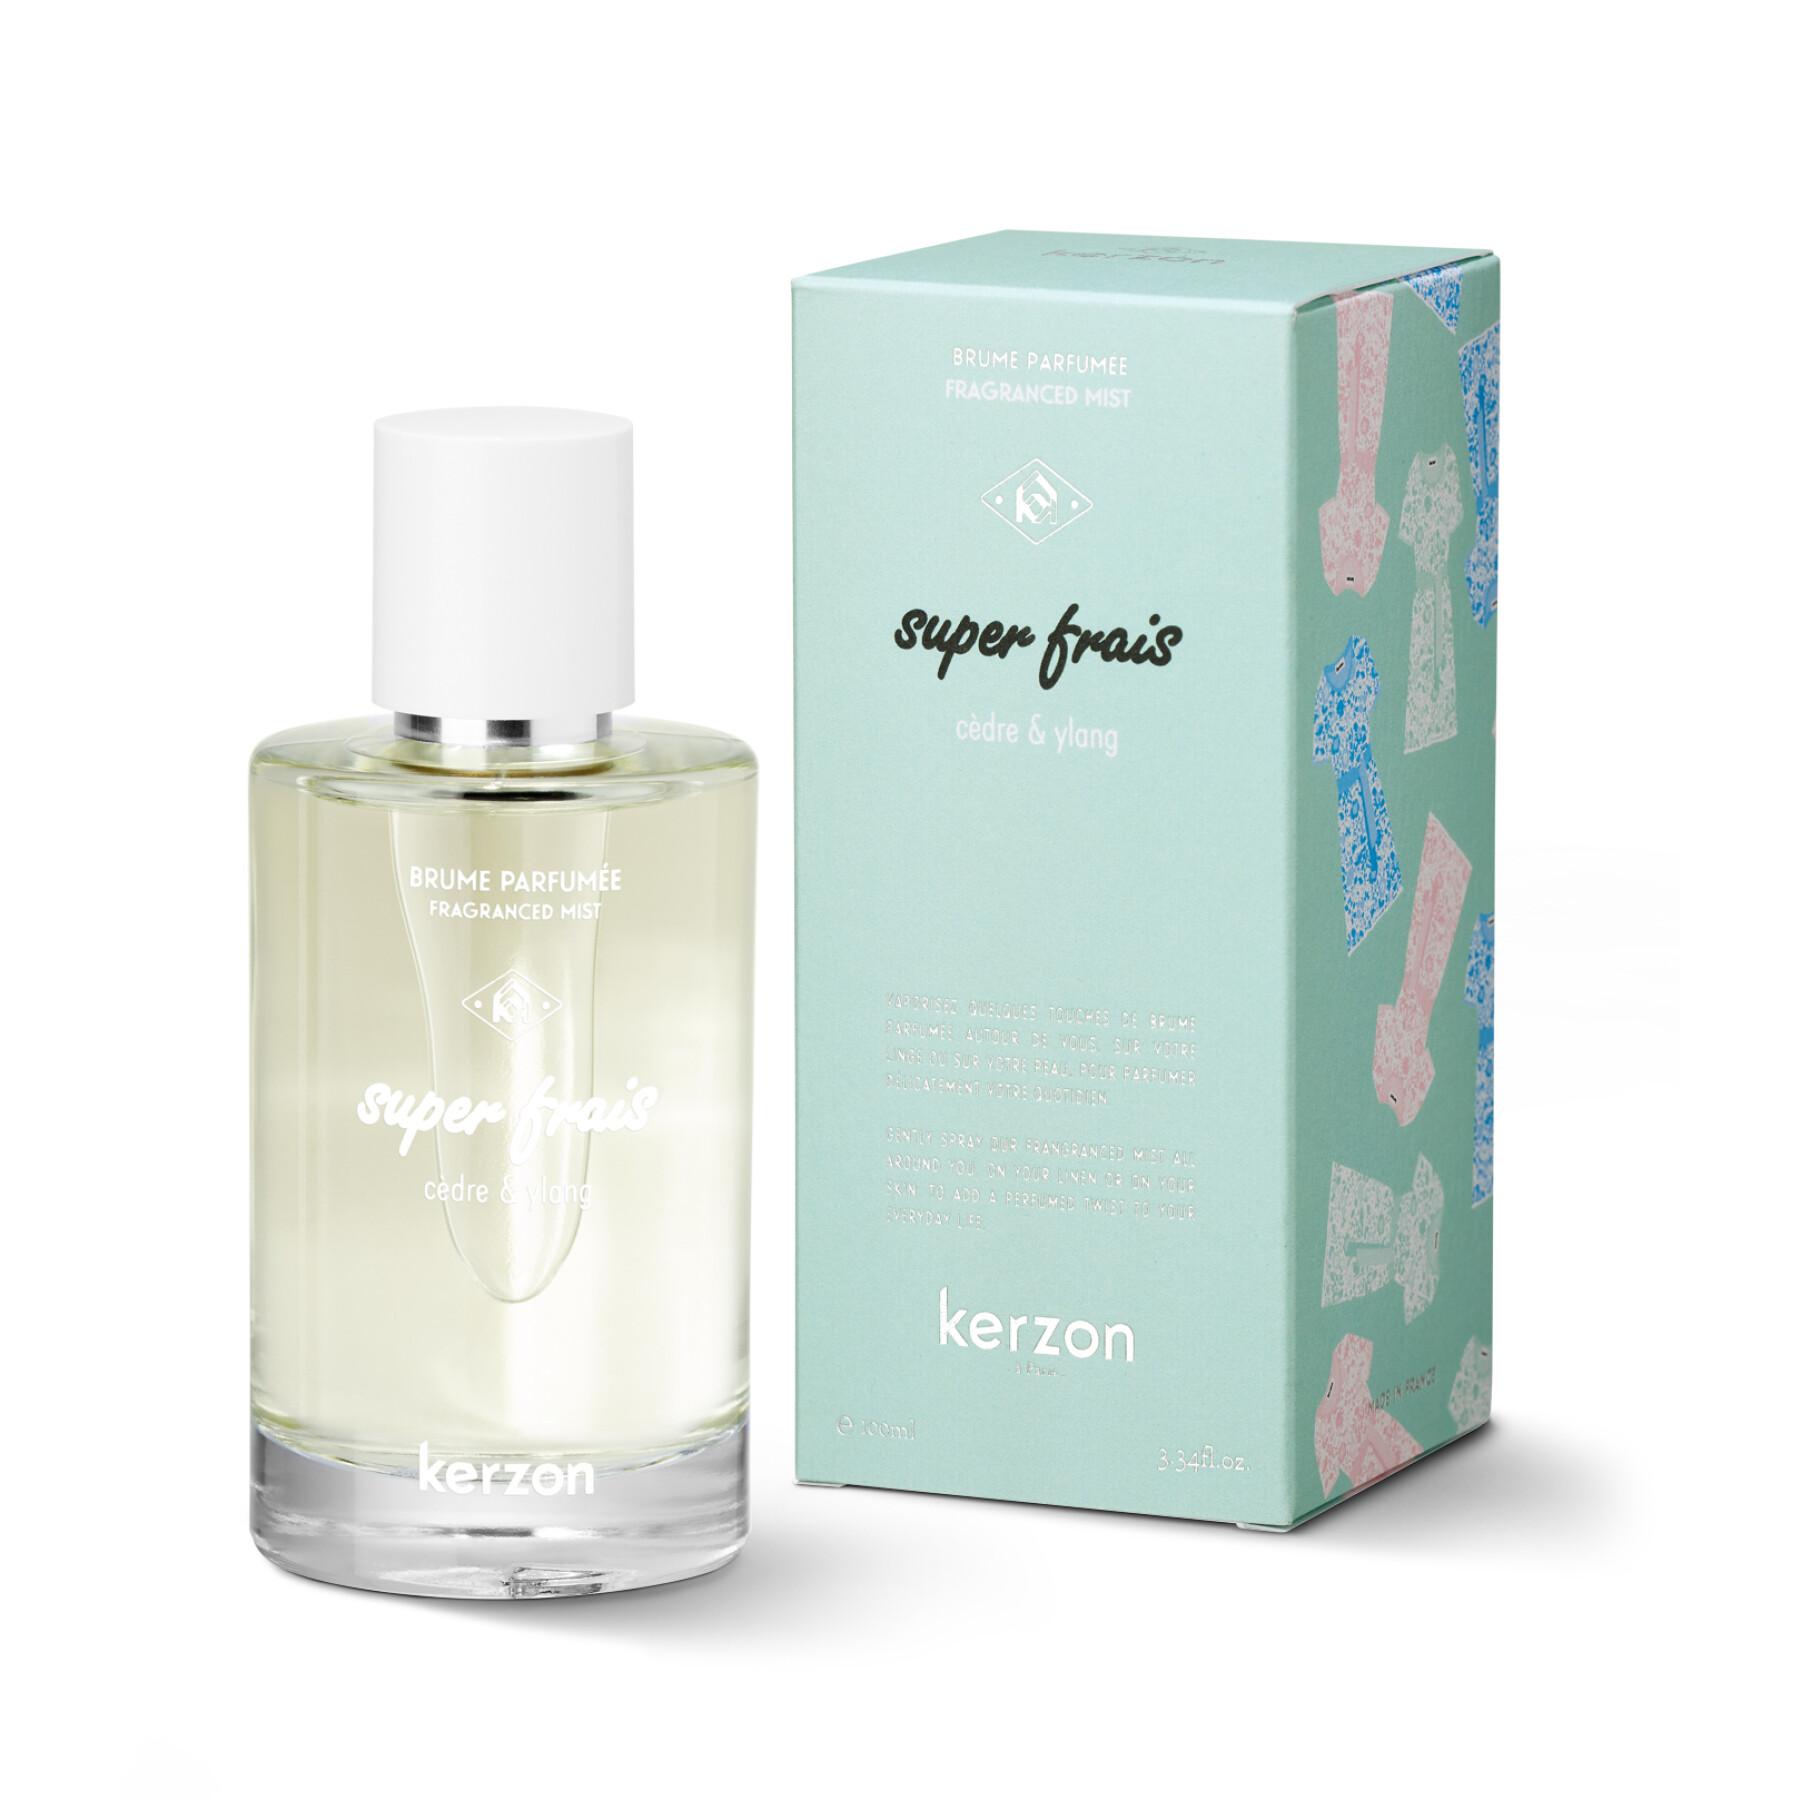 Super fresh scented spray Kerzon